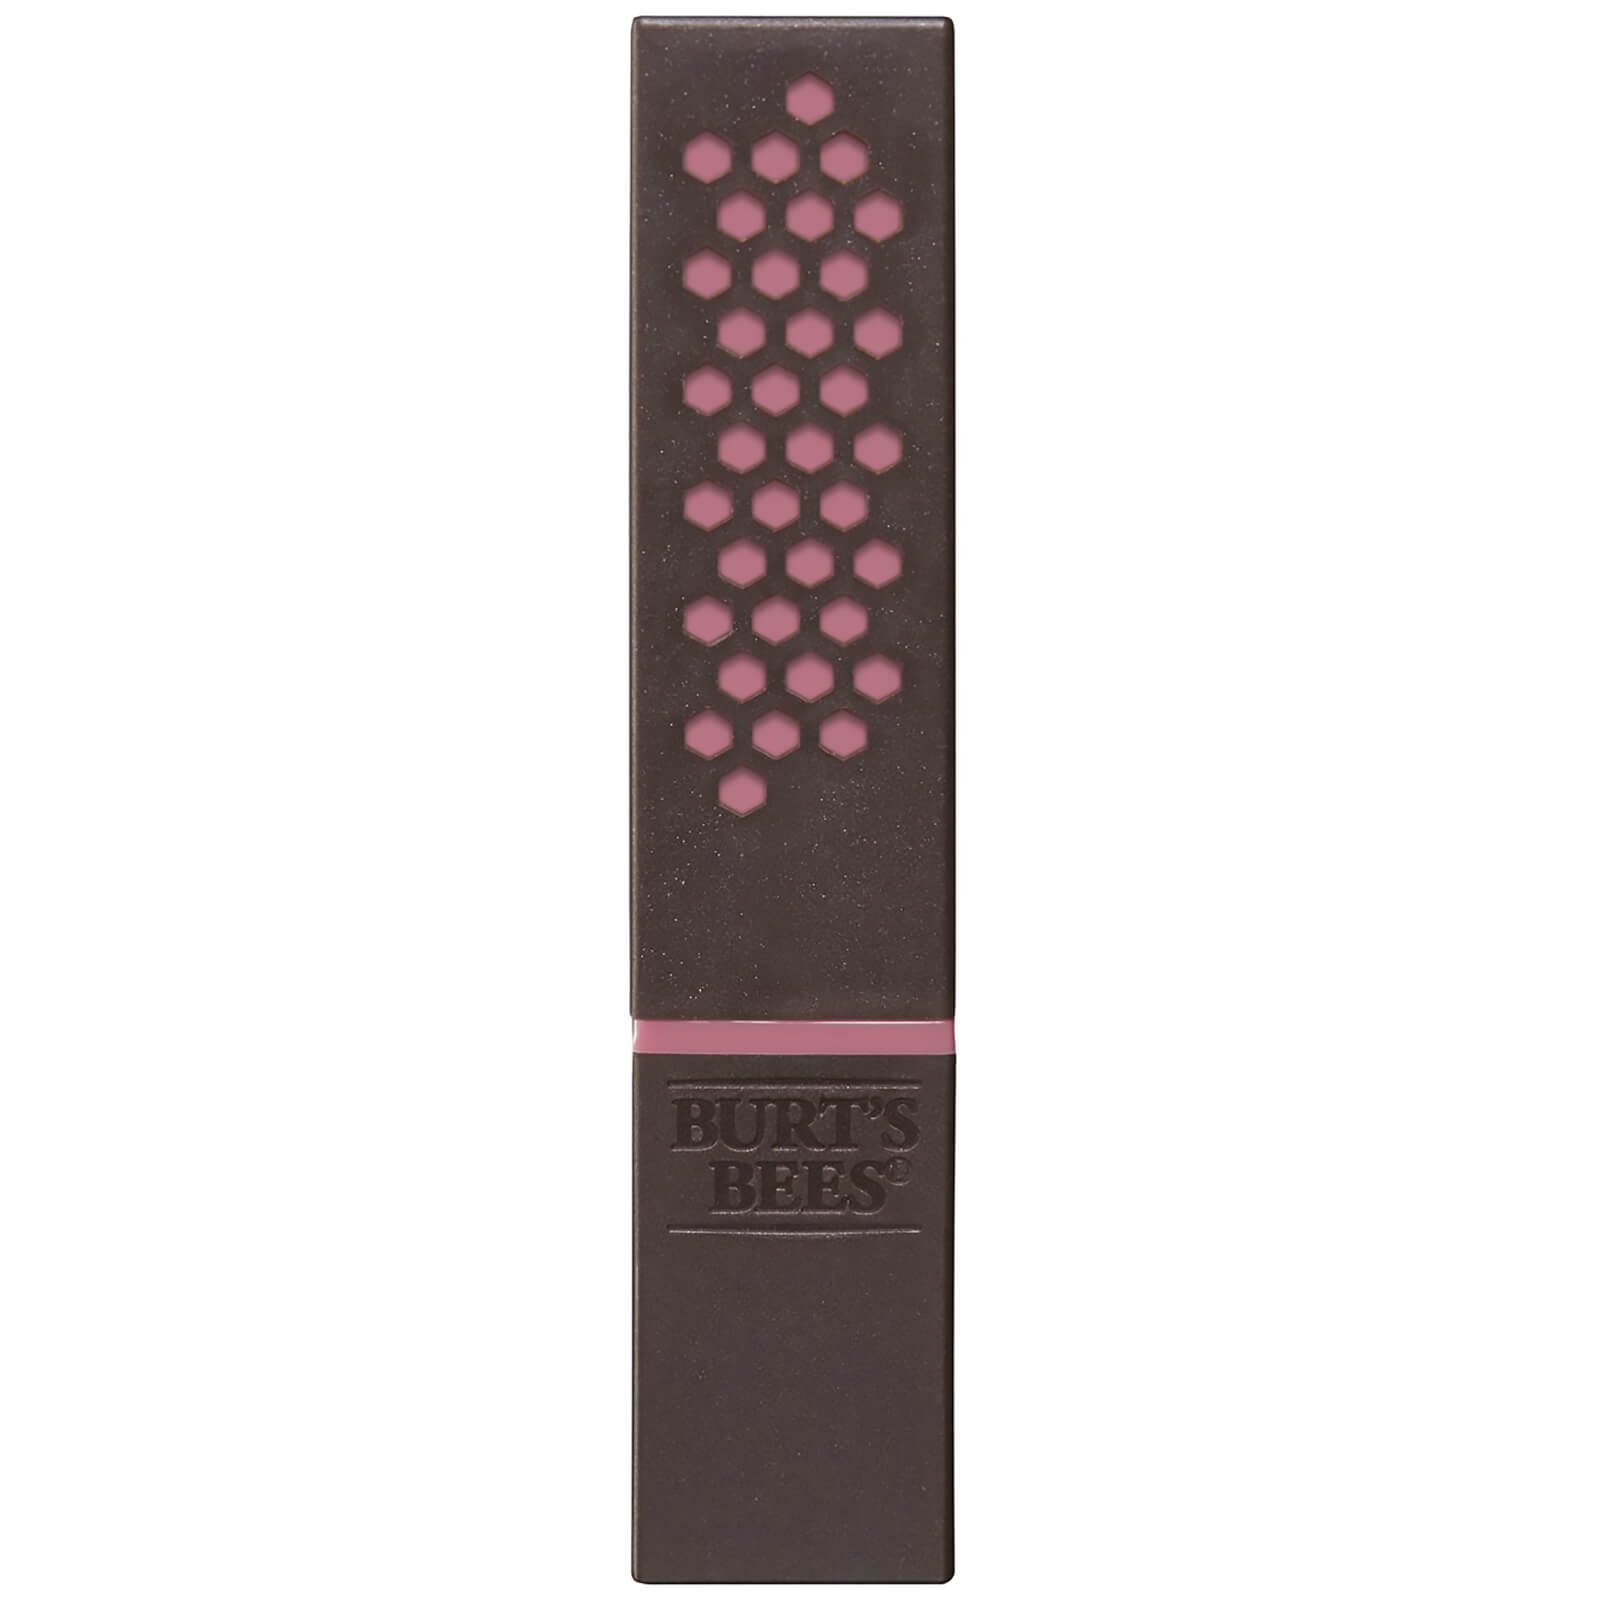 Burt's Bees 100% Natural Glossy Lipstick (flere nyanser) - Rose Falls